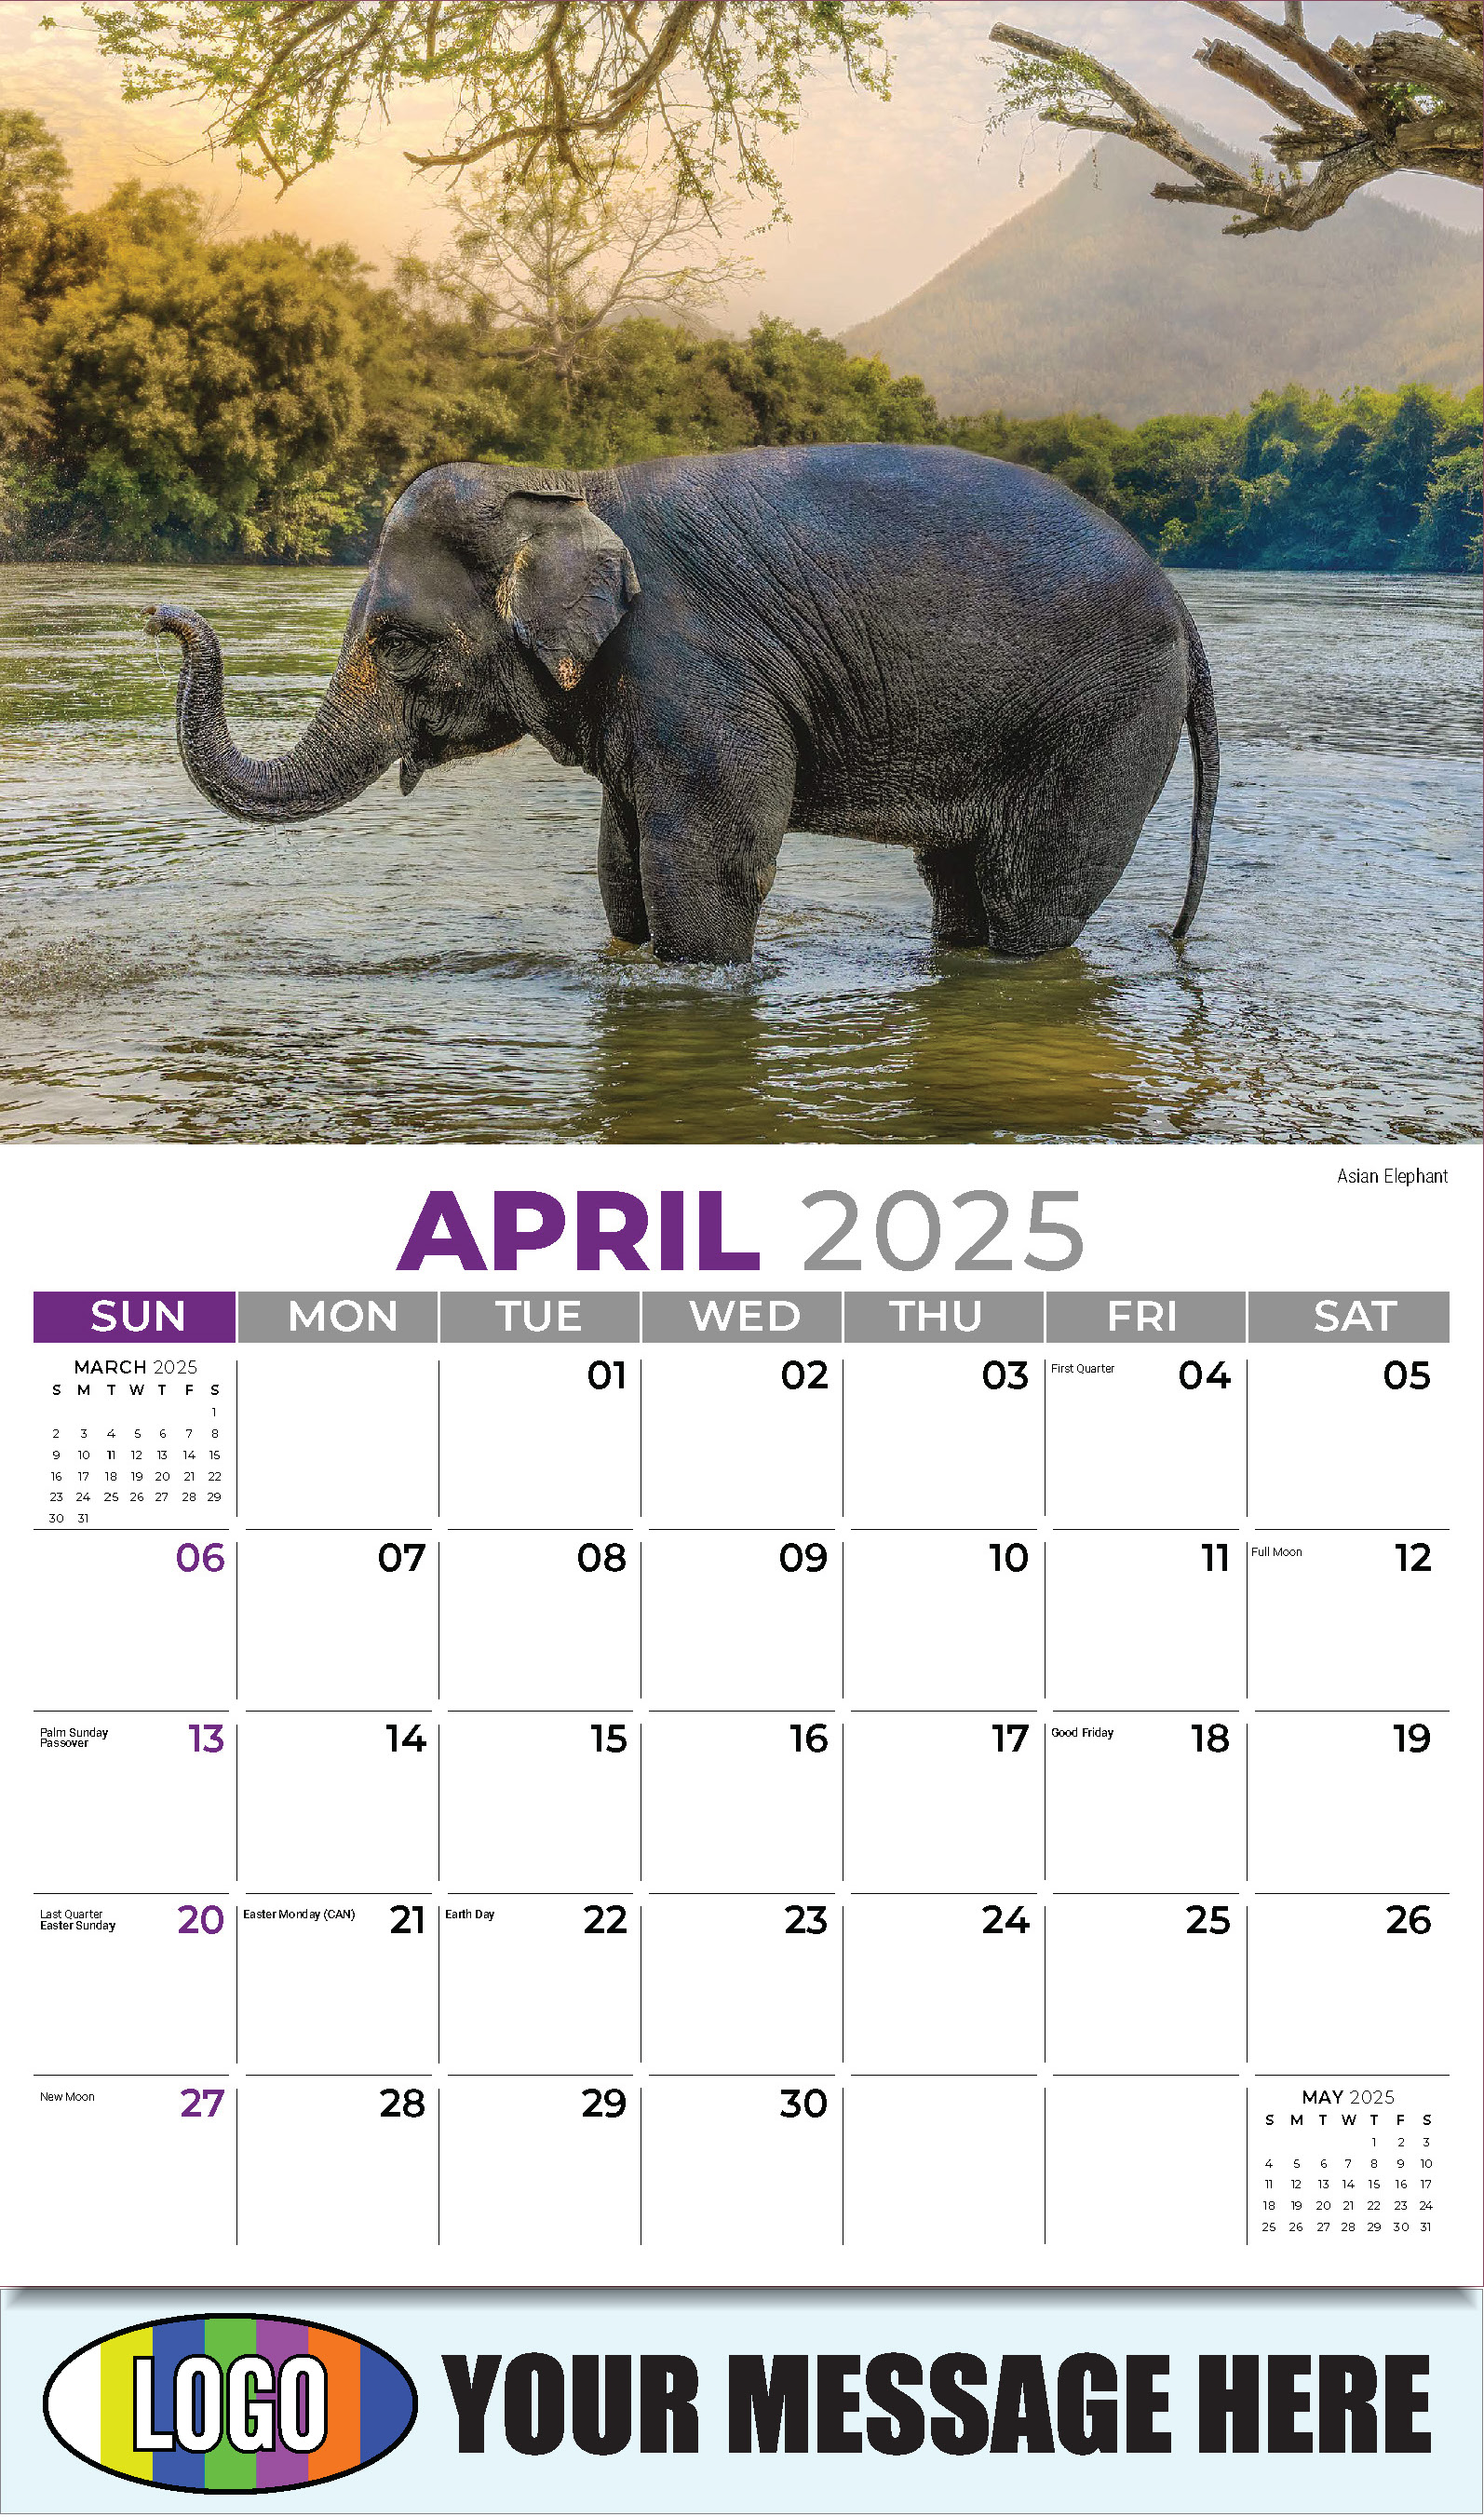 International Wildlife 2025 Business Advertising Wall Calendar - April